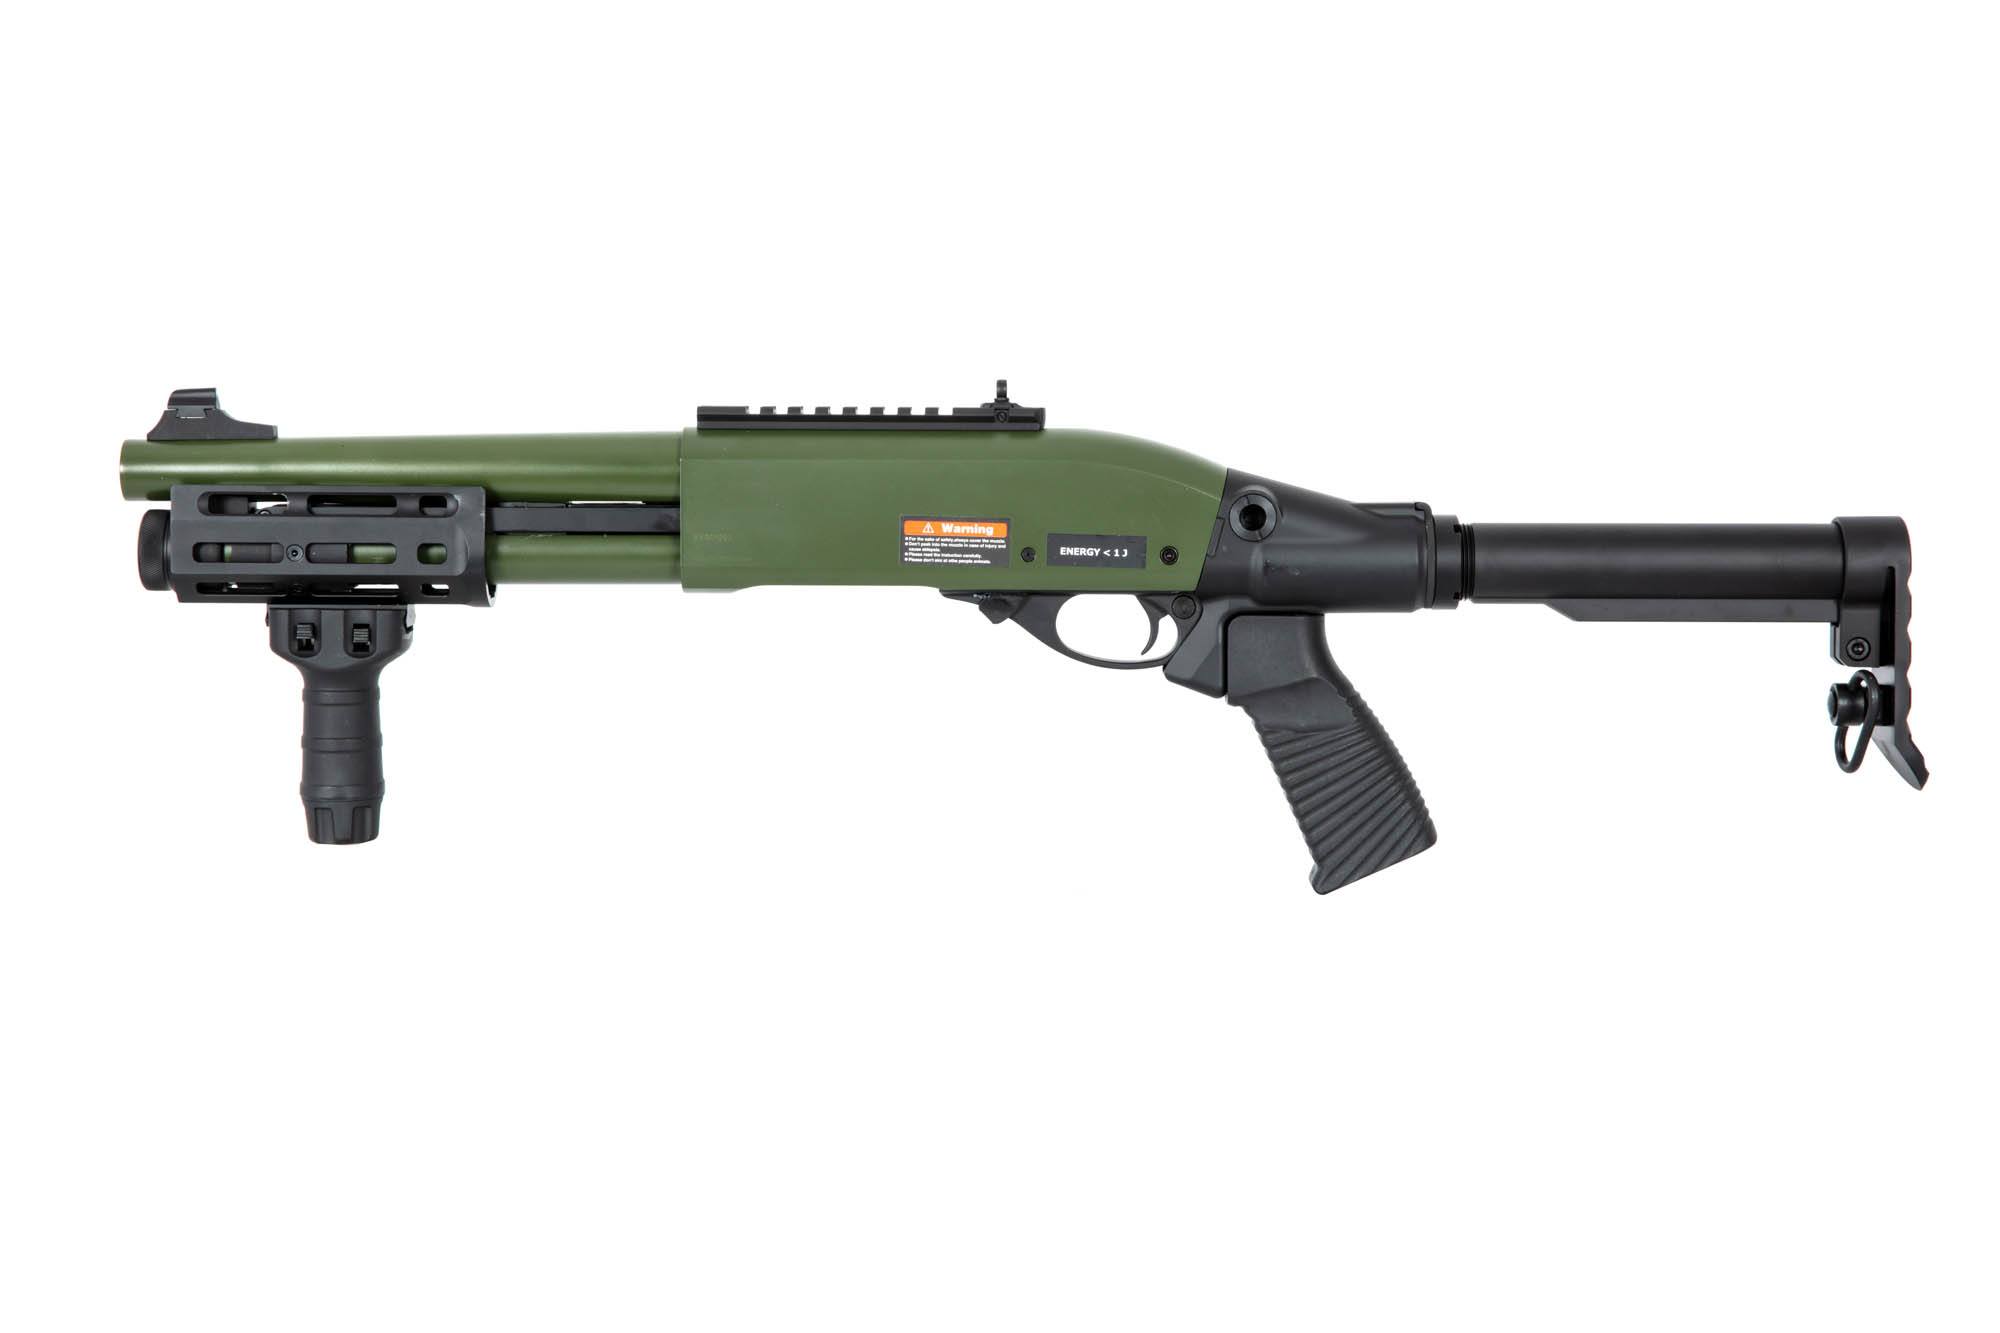 VELITES FERRUM S-III shotgun replica - olive